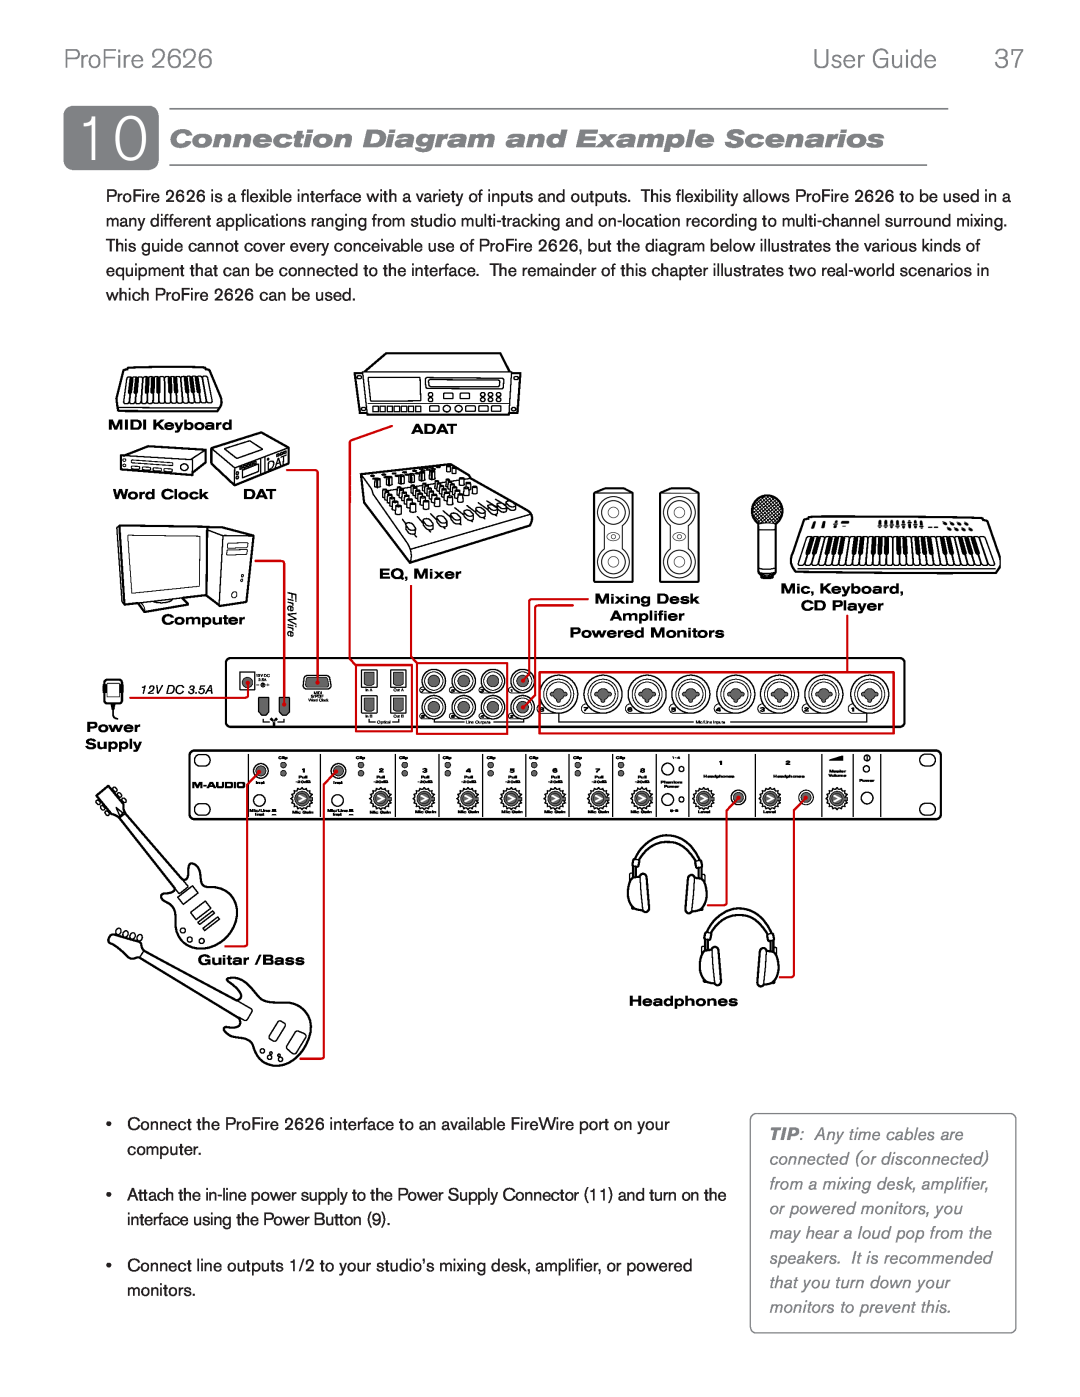 M-Audio 2626 manual Connection Diagram and Example Scenarios, ProFire, User Guide 